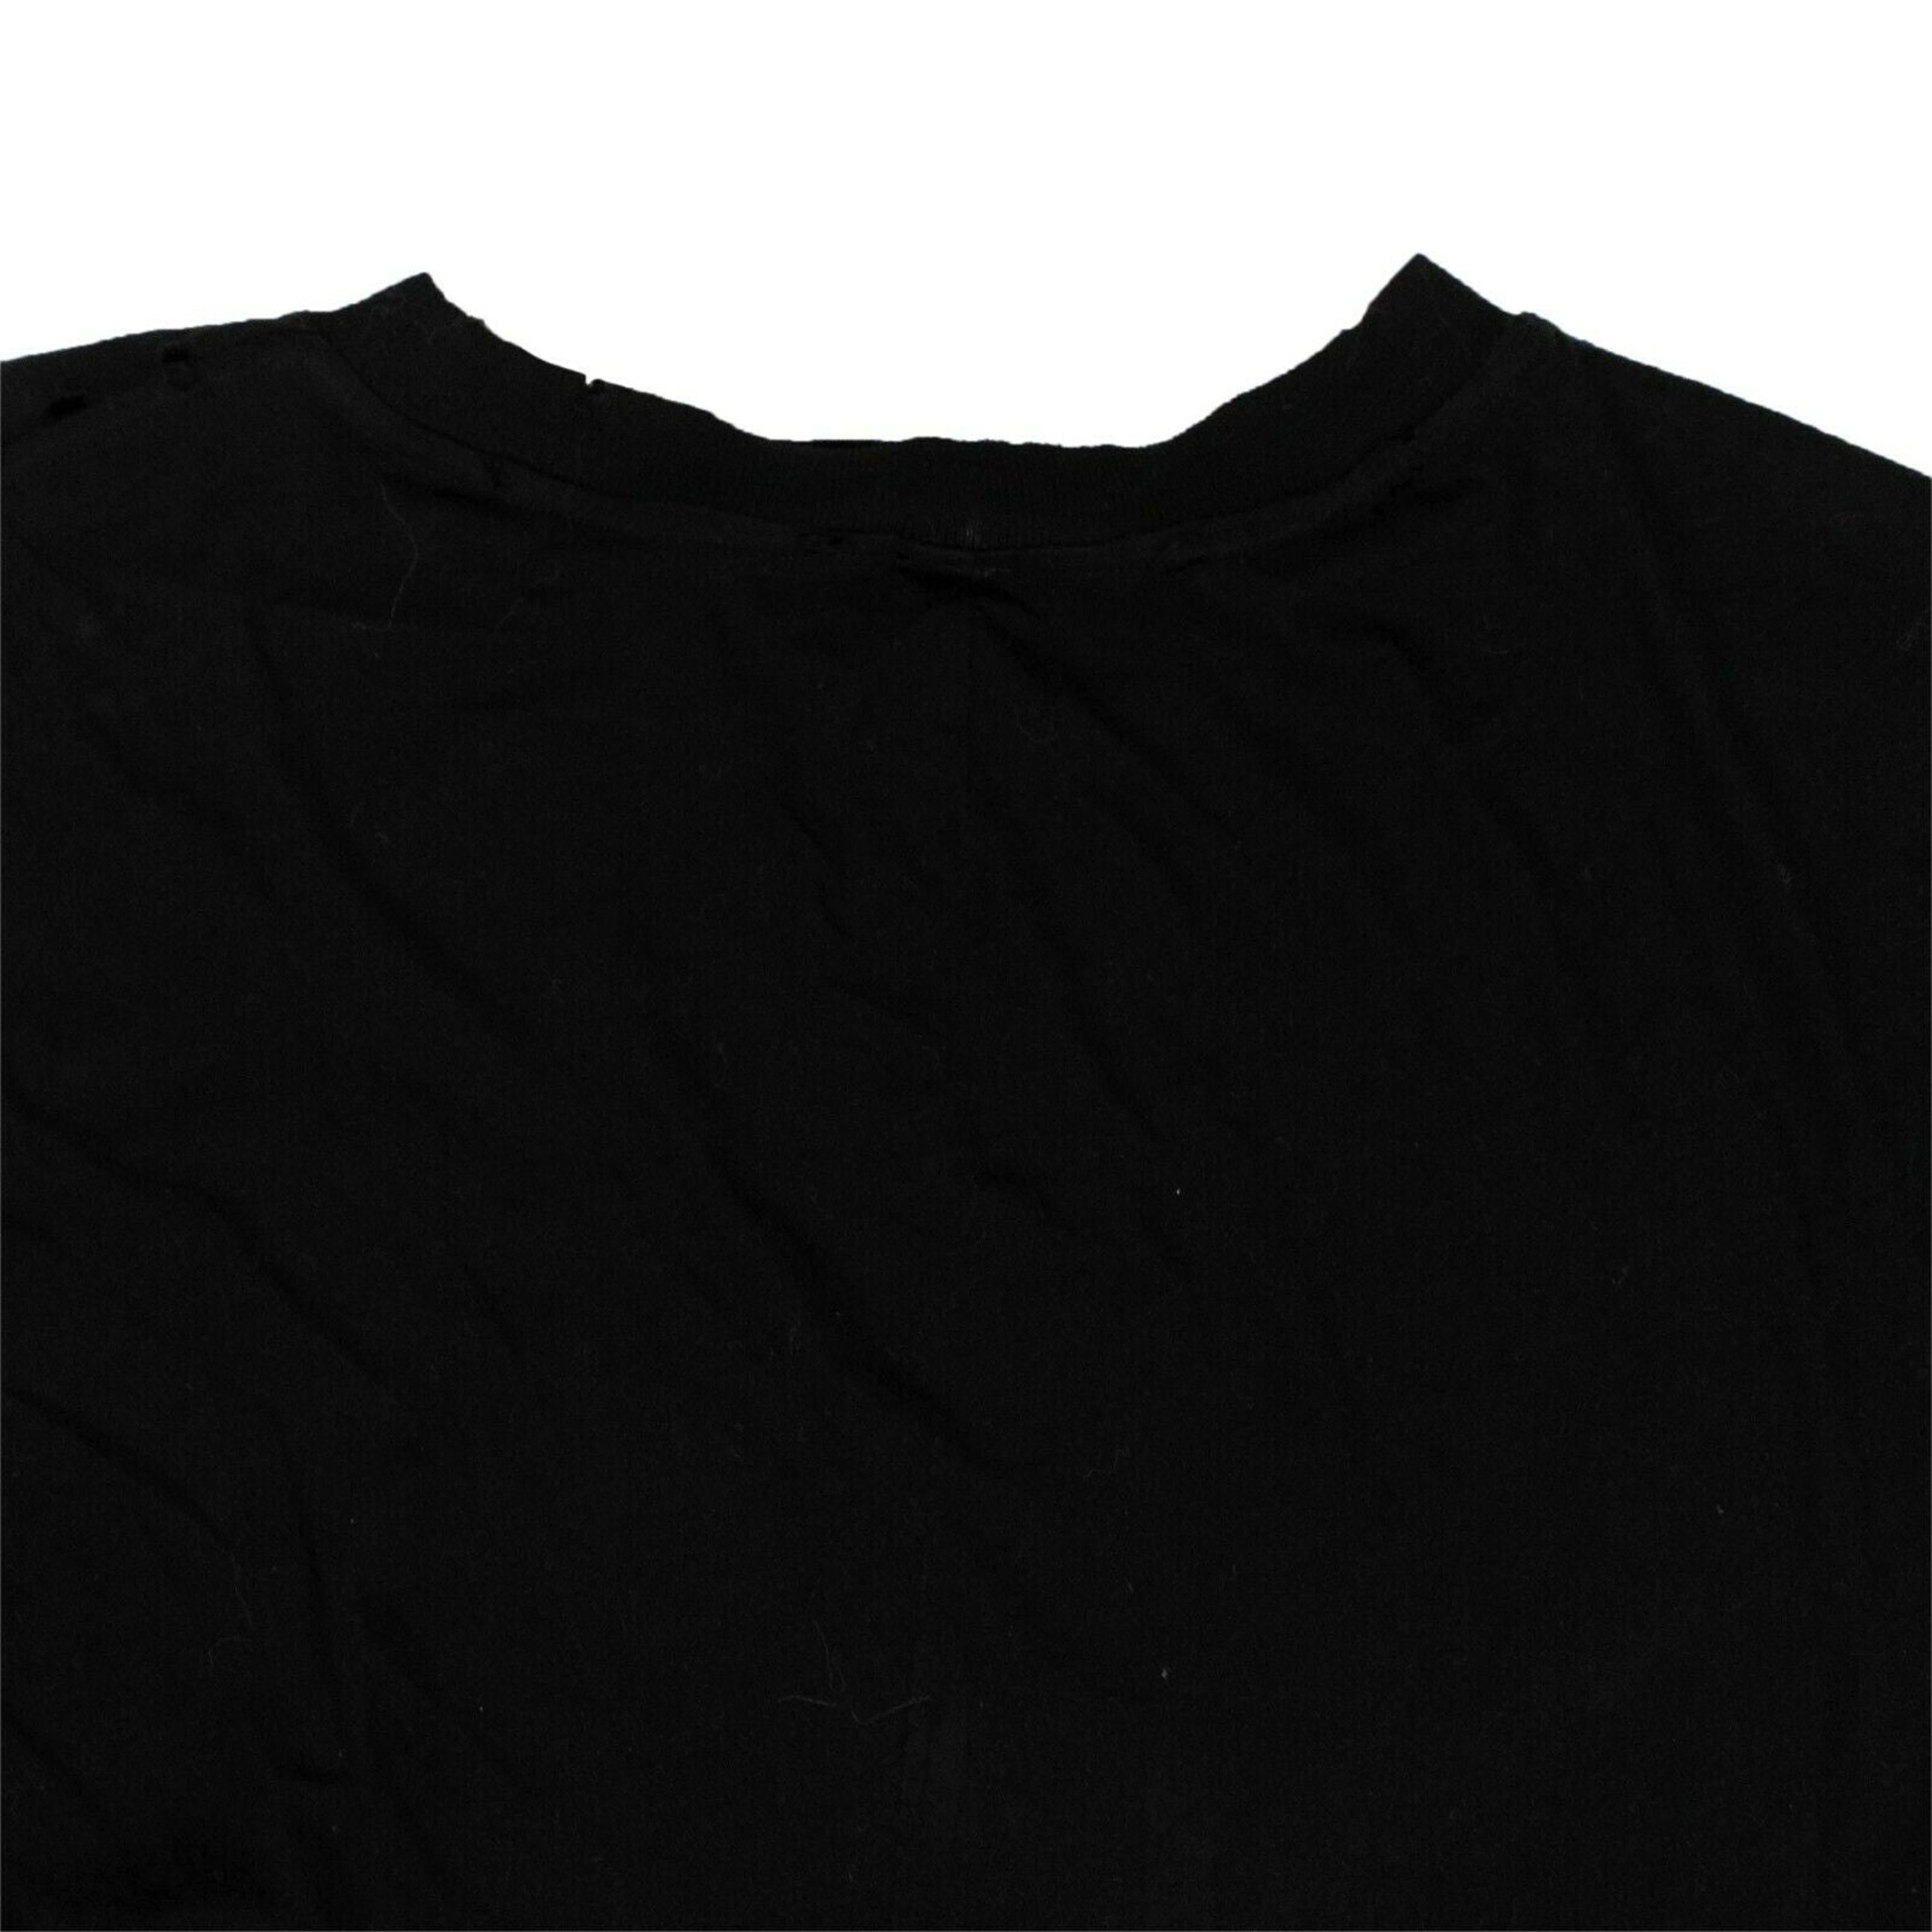 Alternate View 4 of Black Long Distressed T-Shirt